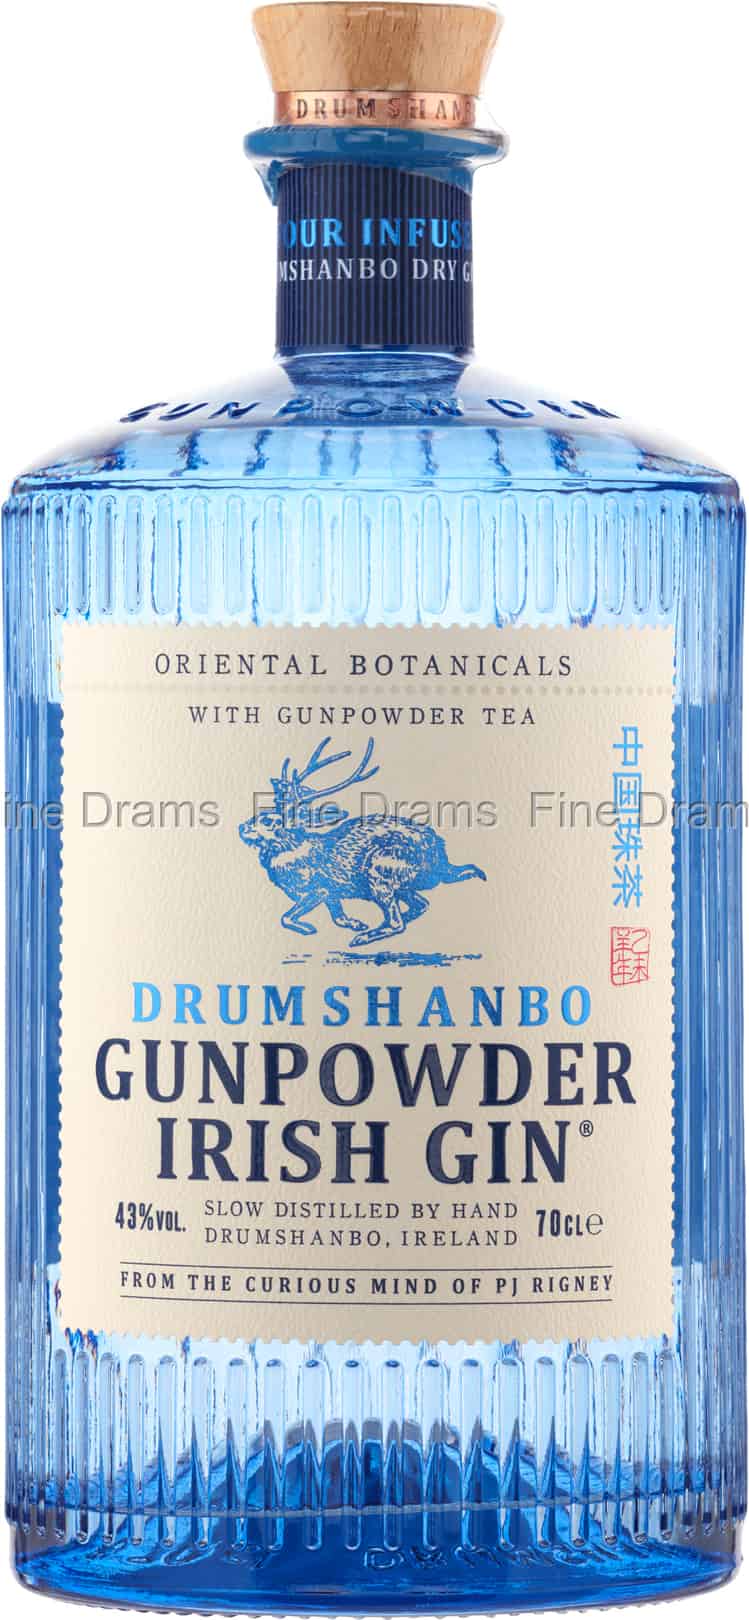 Drumshanbo Gin Gunpowder Irish